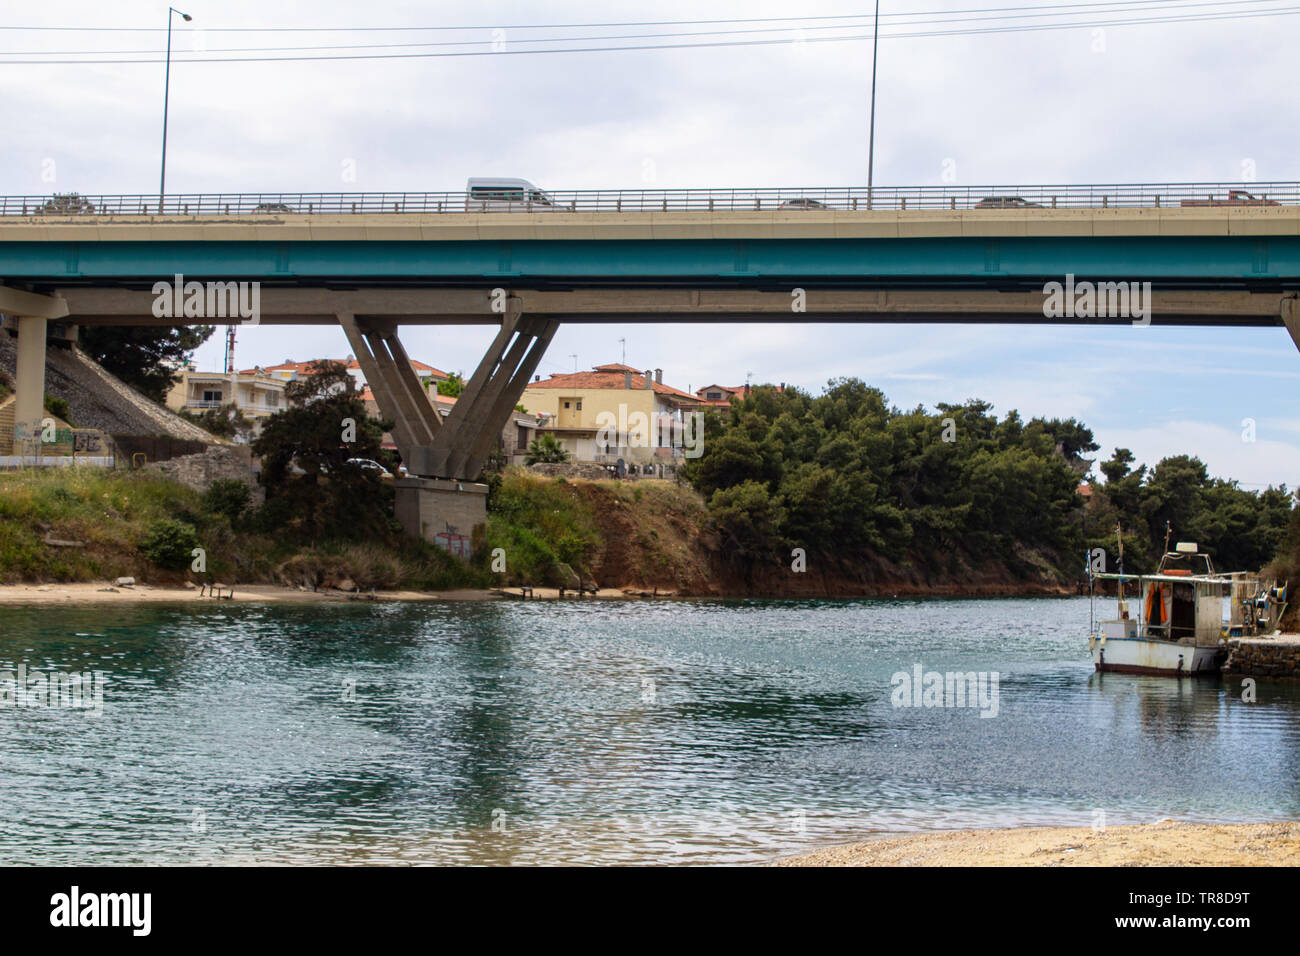 The A24 road bridge spanning the Nea Poteidea Canal in Halkidiki, Greece. Stock Photo